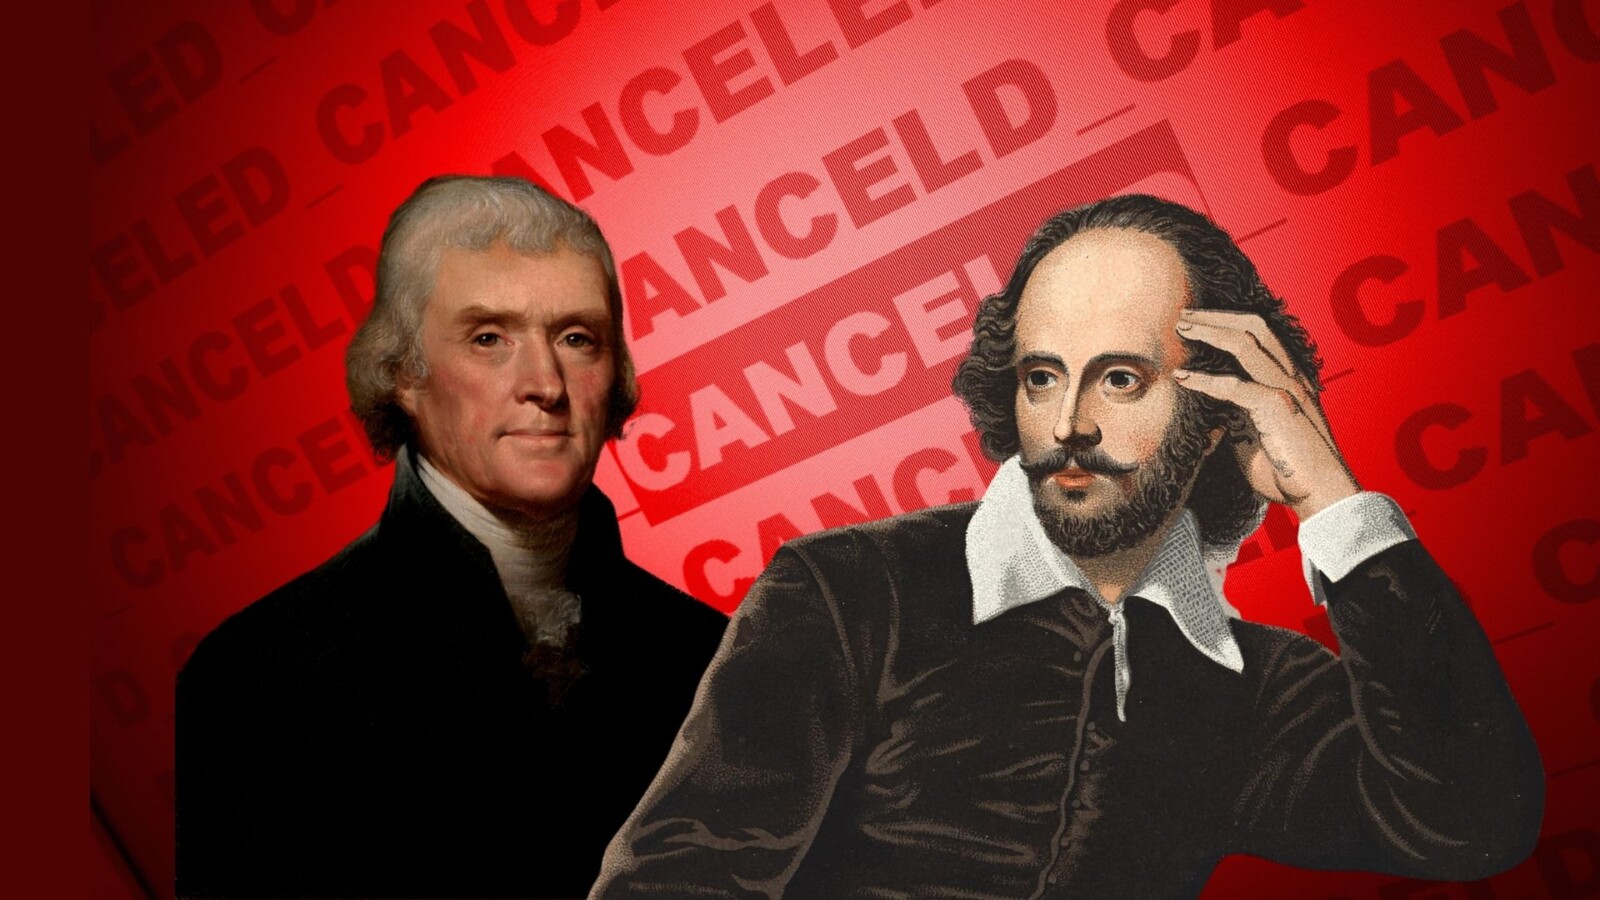 William Shakespeare Thomas Jefferson cancel culture